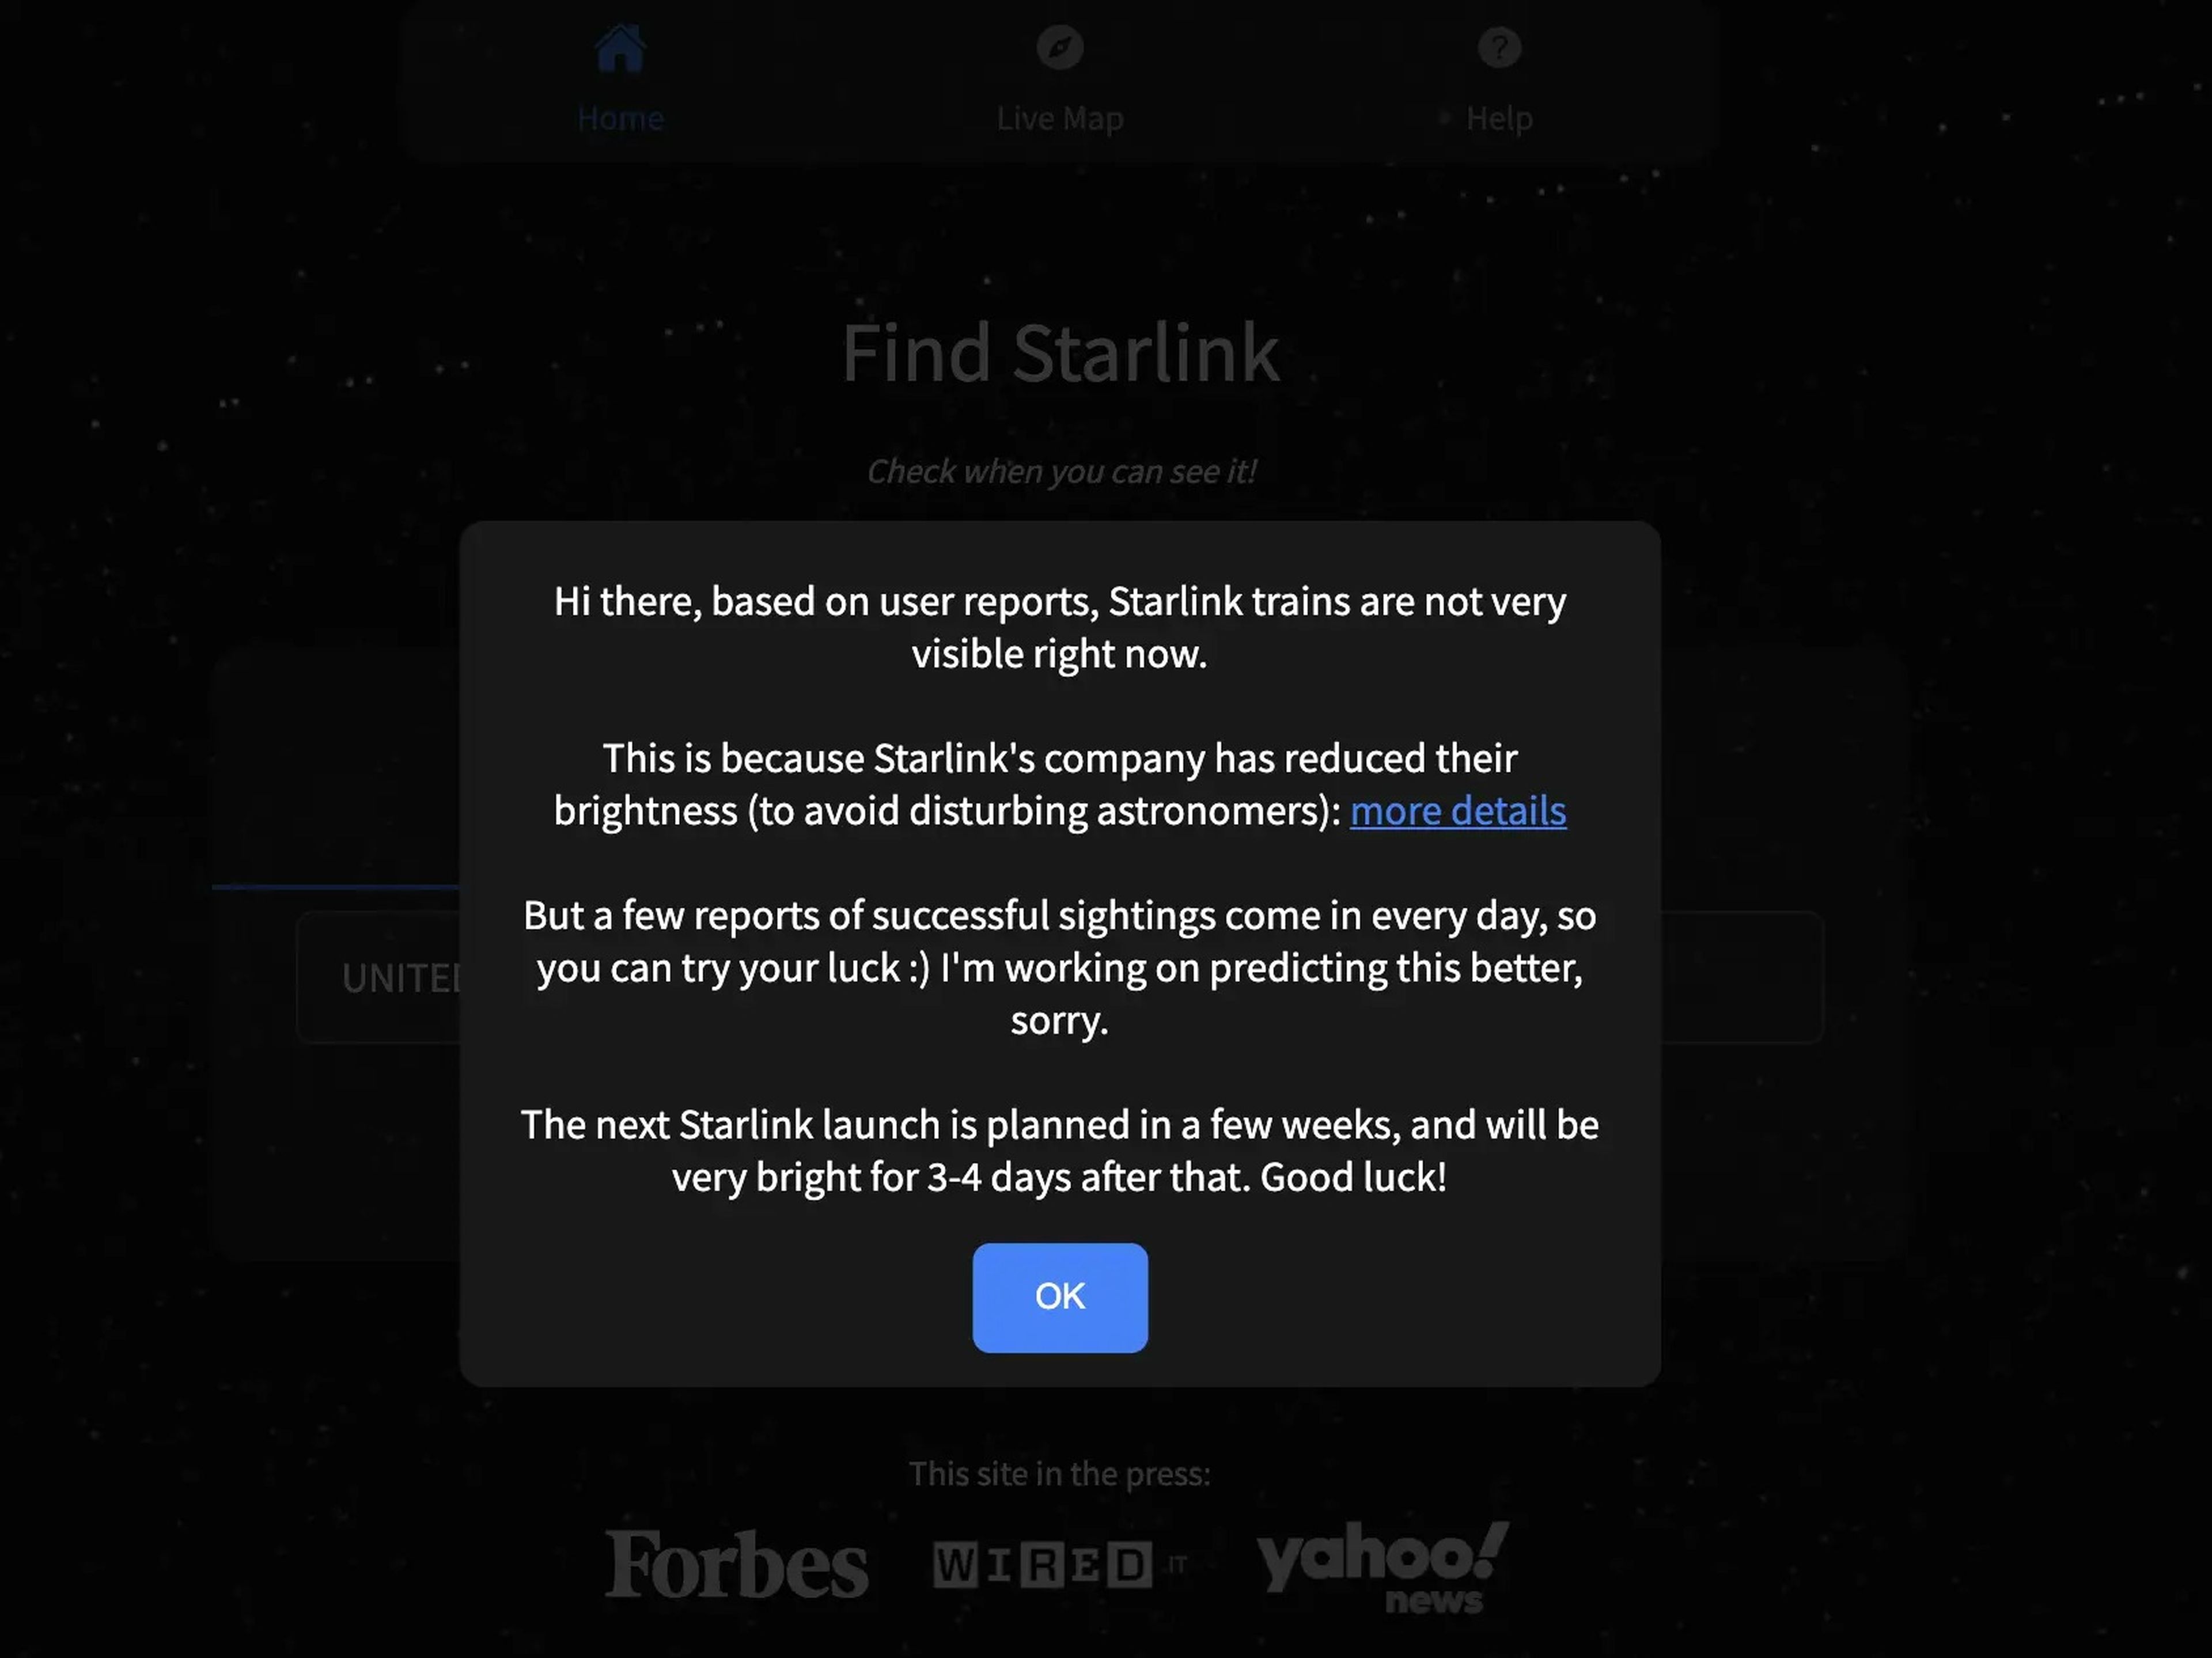 Captura de pantalla del aviso de Find Starlink.